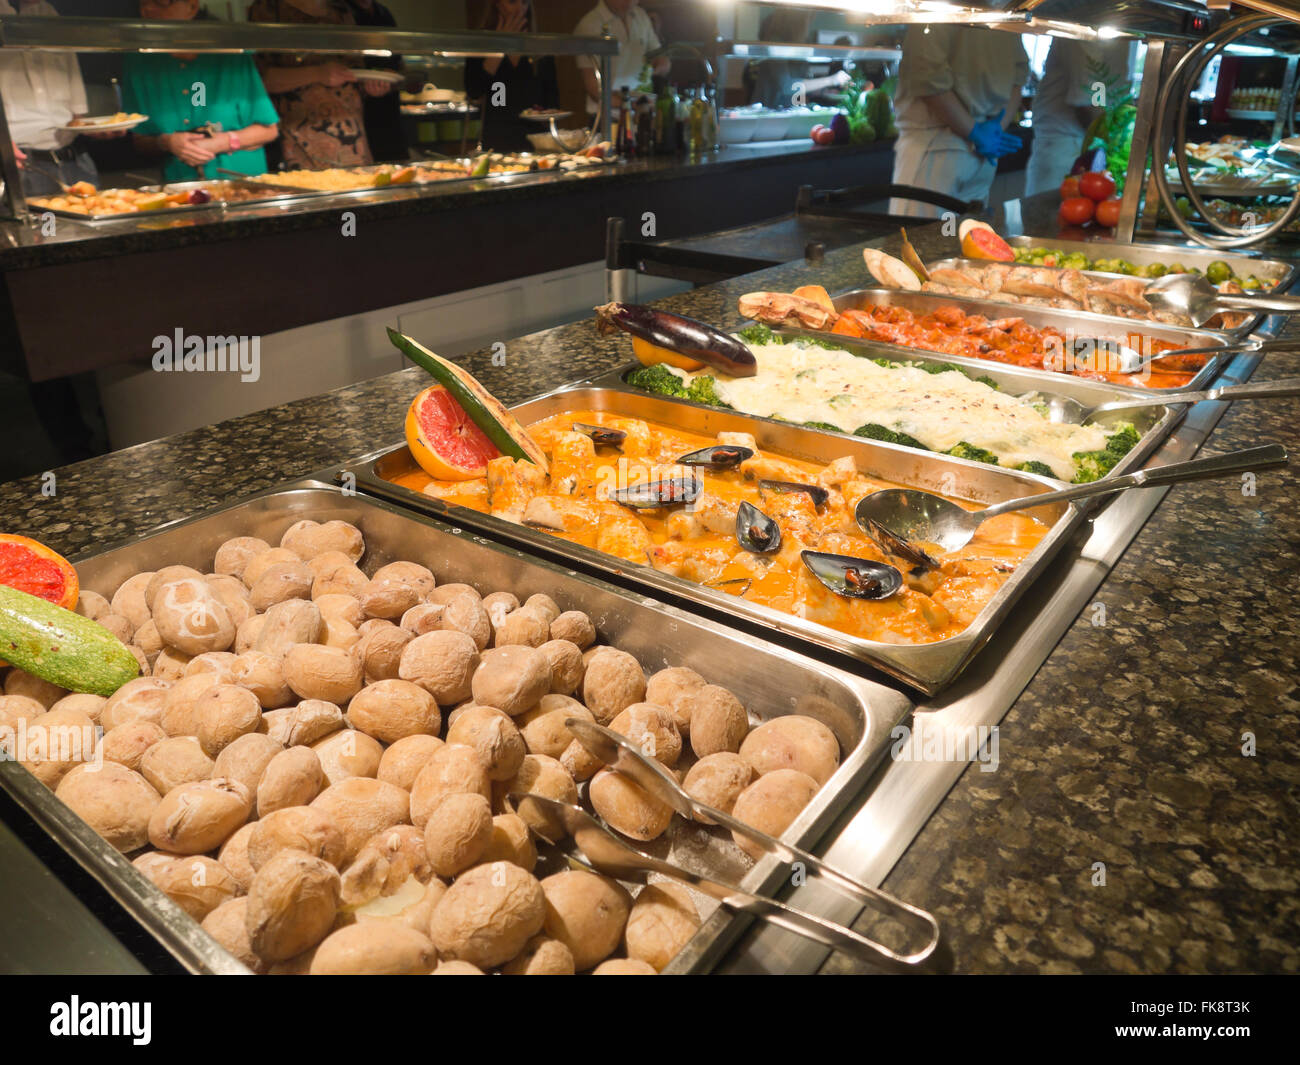 Comida buffet en platos fotografías e imágenes de alta resolución - Alamy